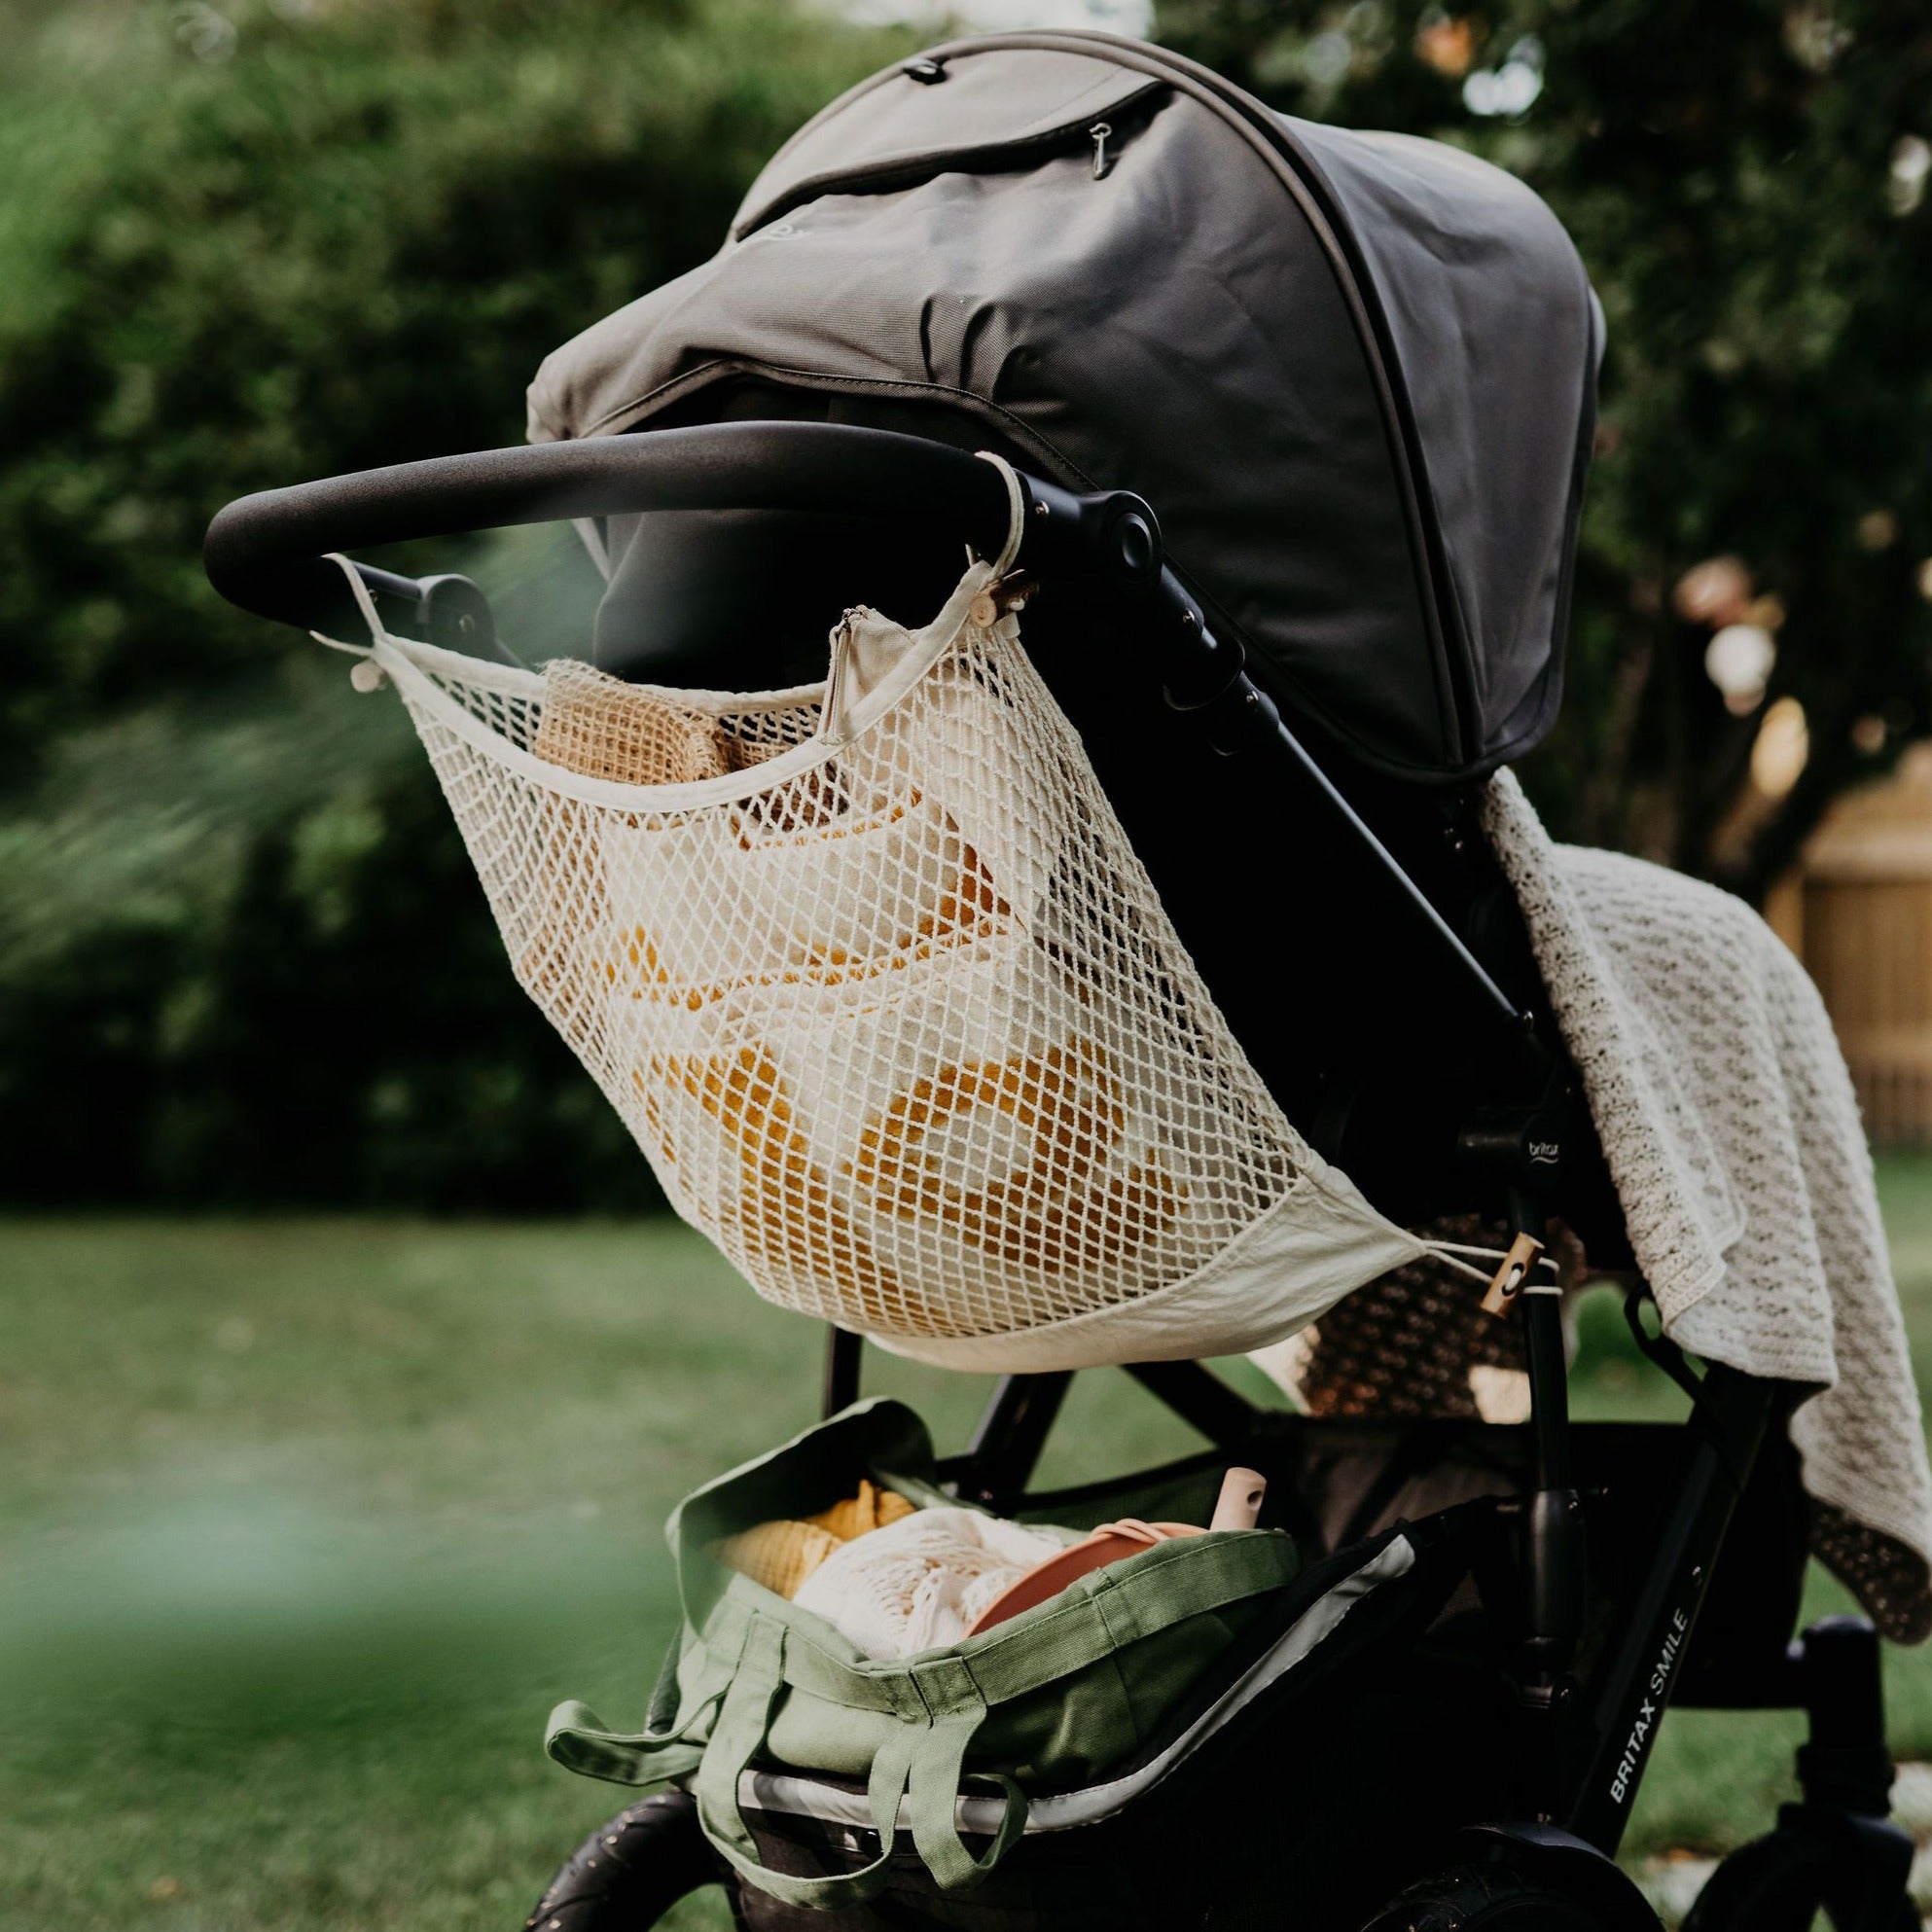 Nätkasse till barnvagn ekologisk